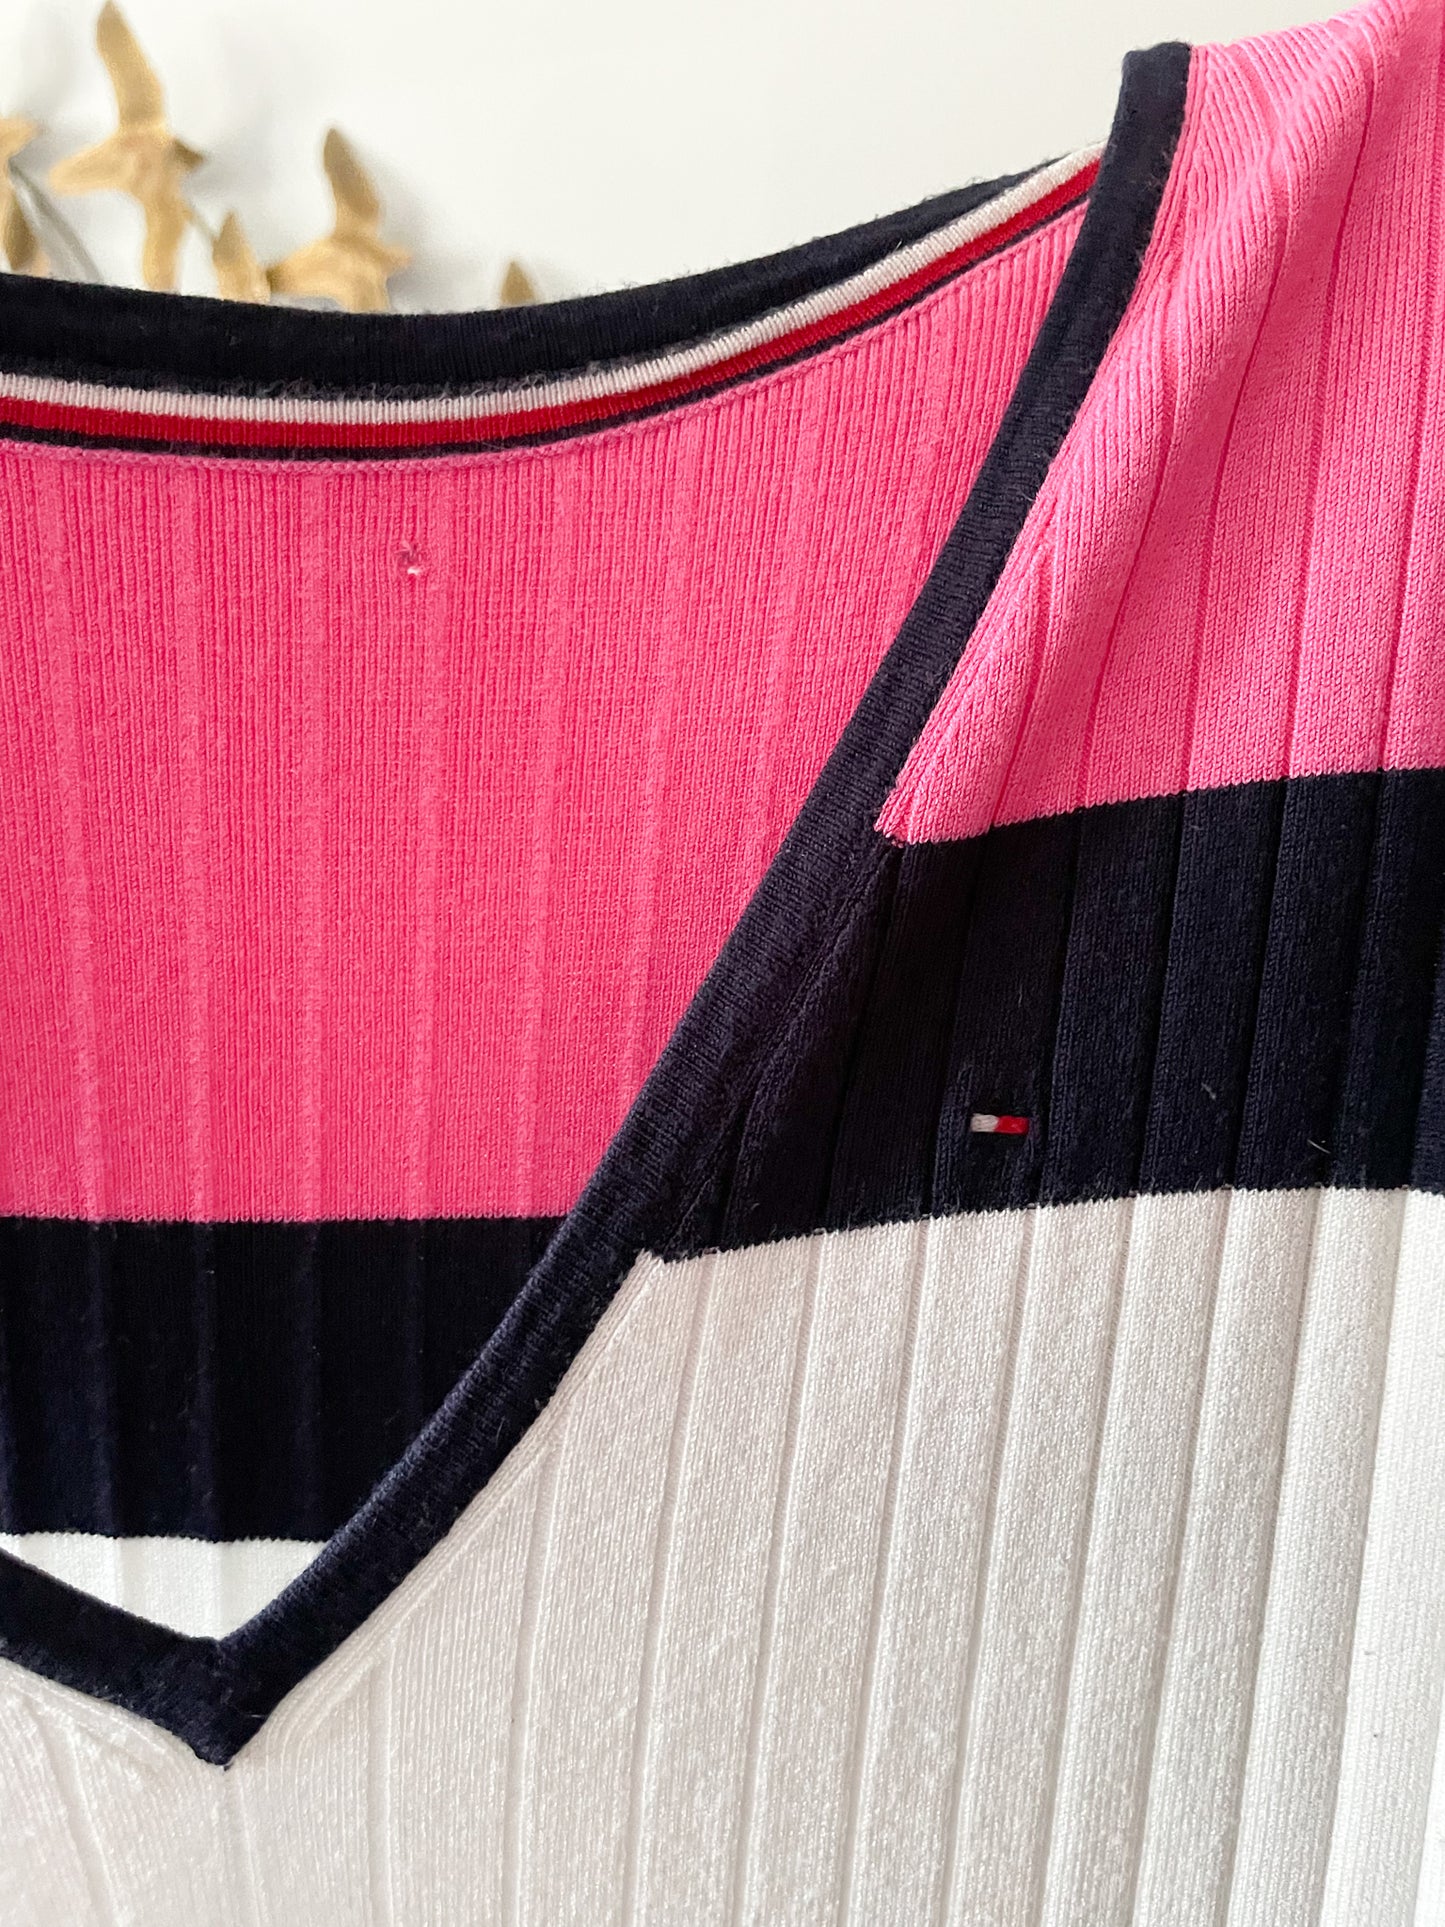 Tommy Hilfiger Ribbed – Stripe Fashion Navy Pink Knit Sleeveless Dress & Prix V-Neck Le - Consulting